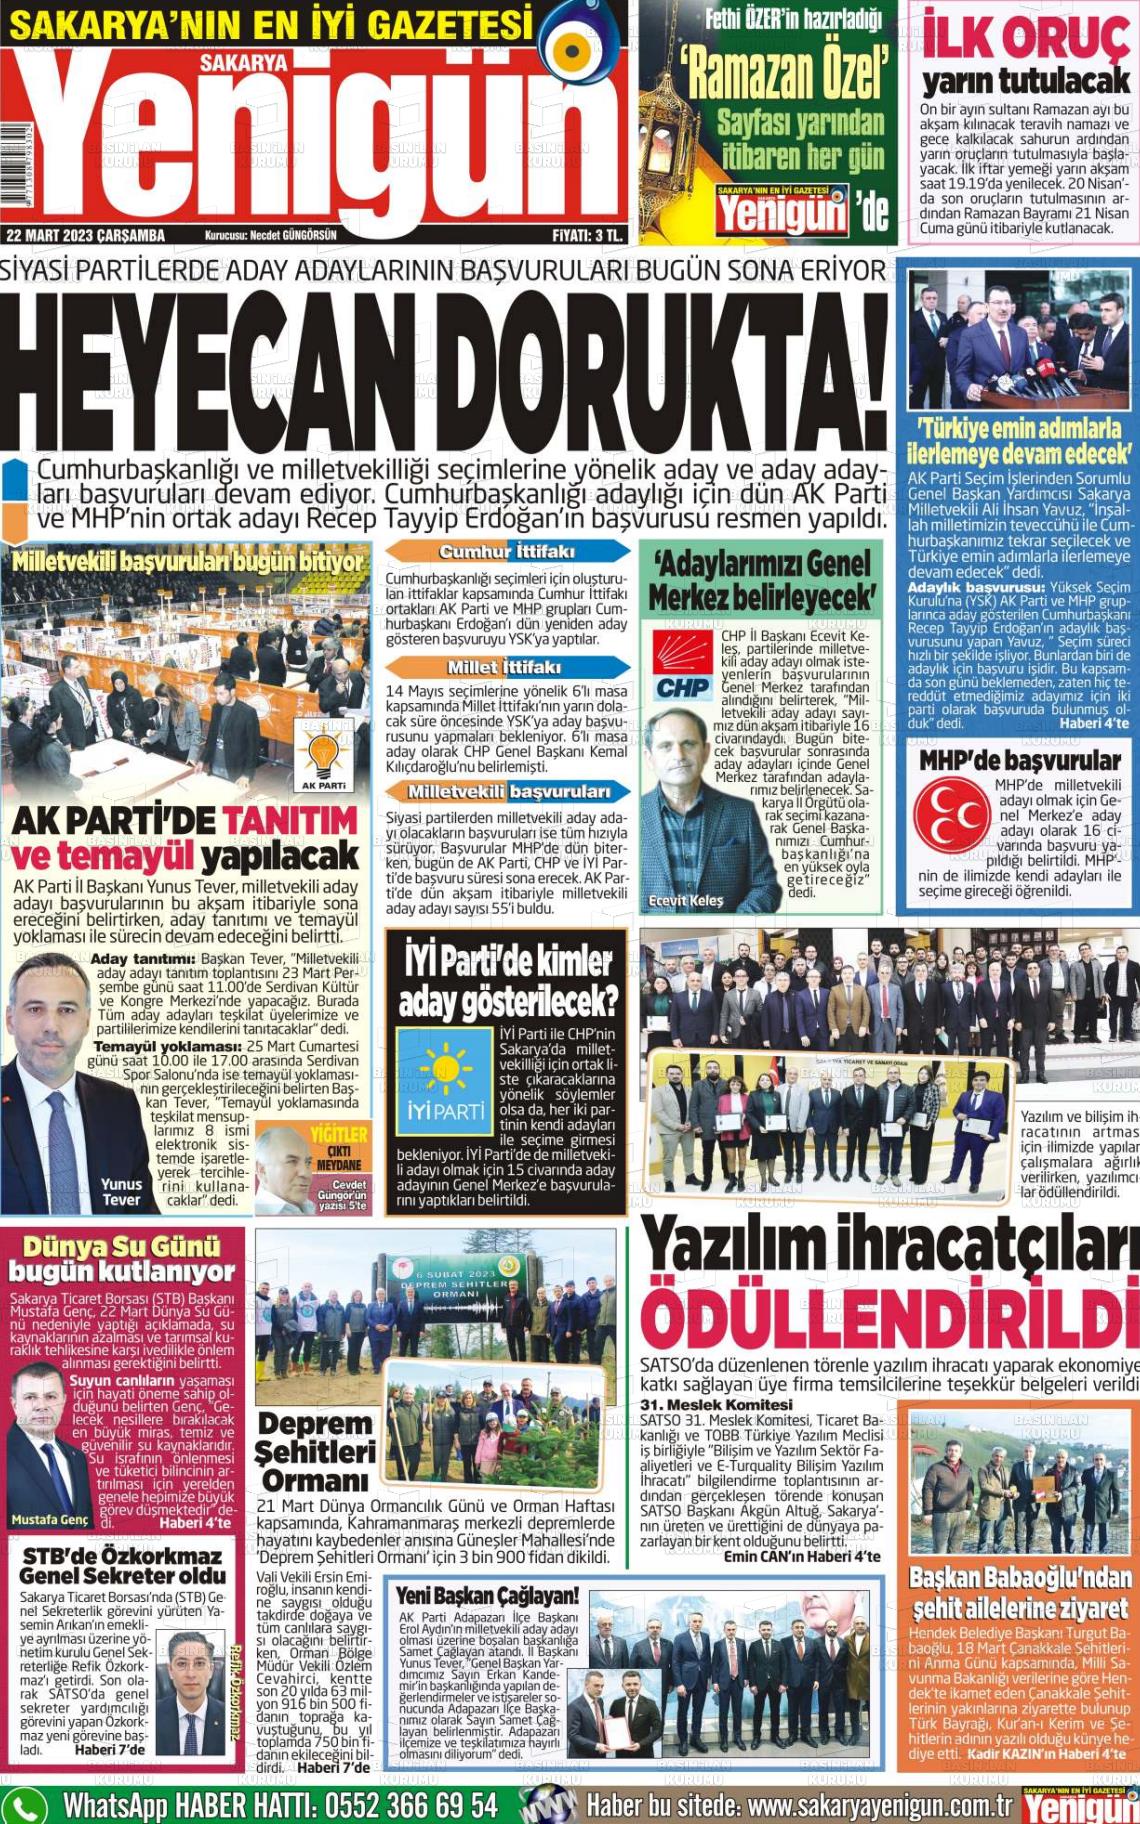 22 Mart 2023 Sakarya Yenigün Gazete Manşeti